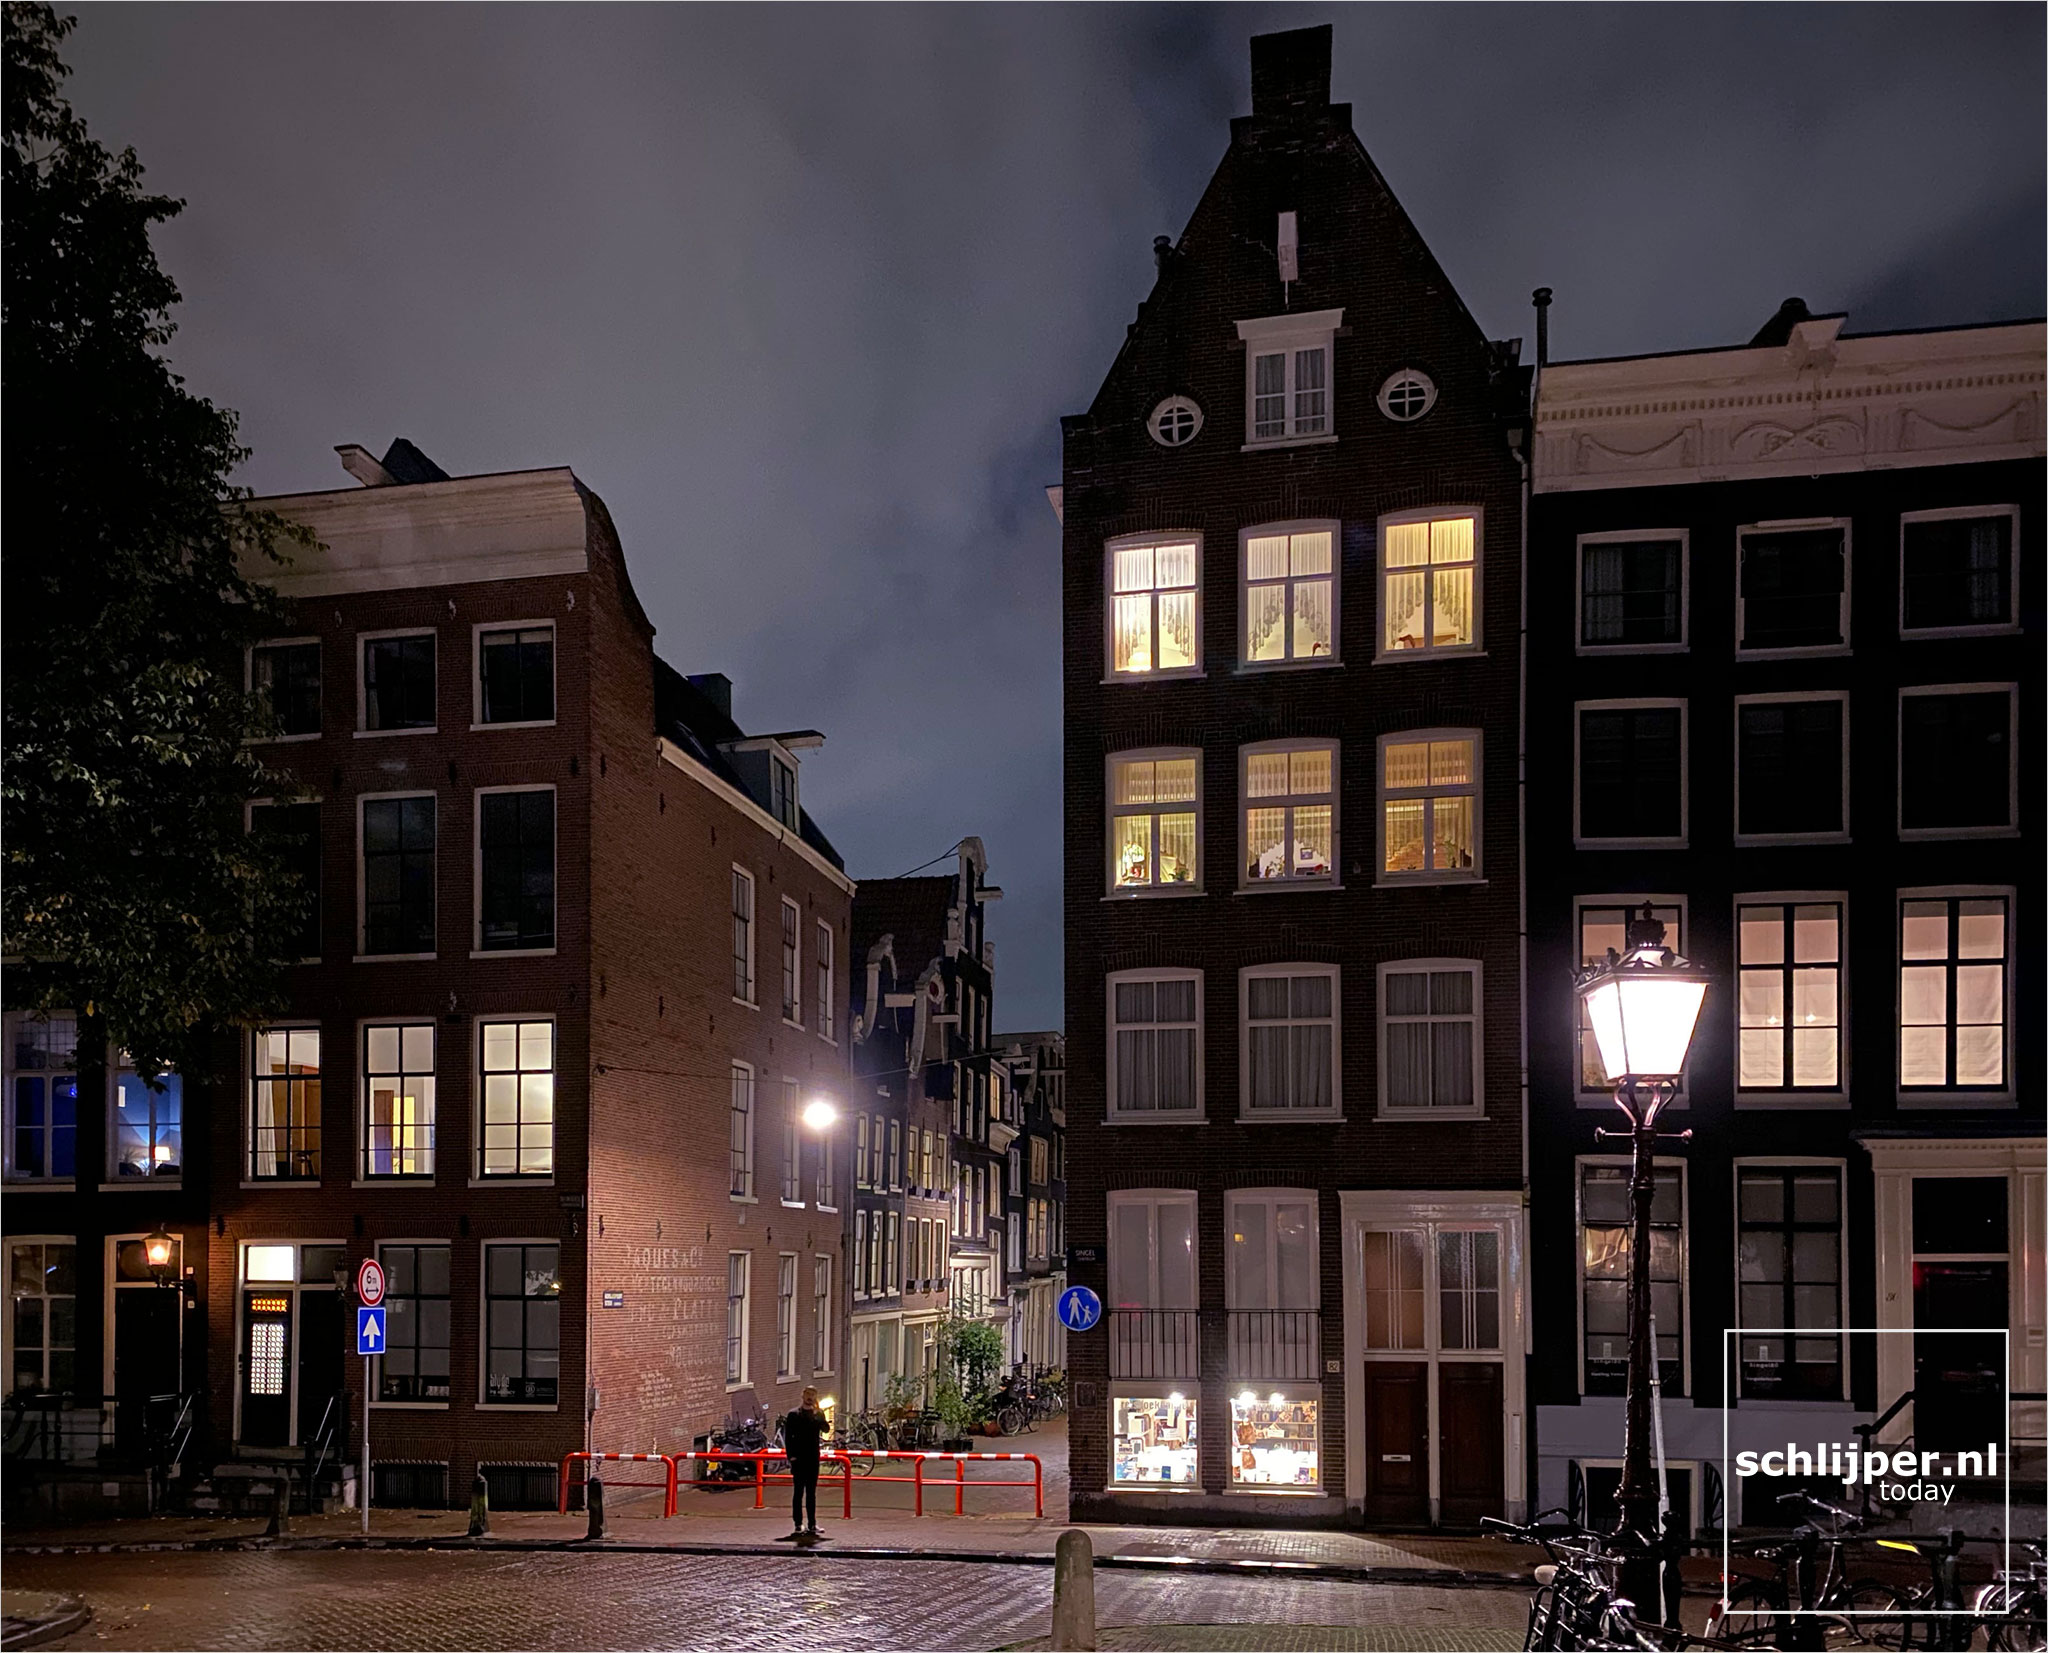 Nederland, Amsterdam, 10 oktober 2020